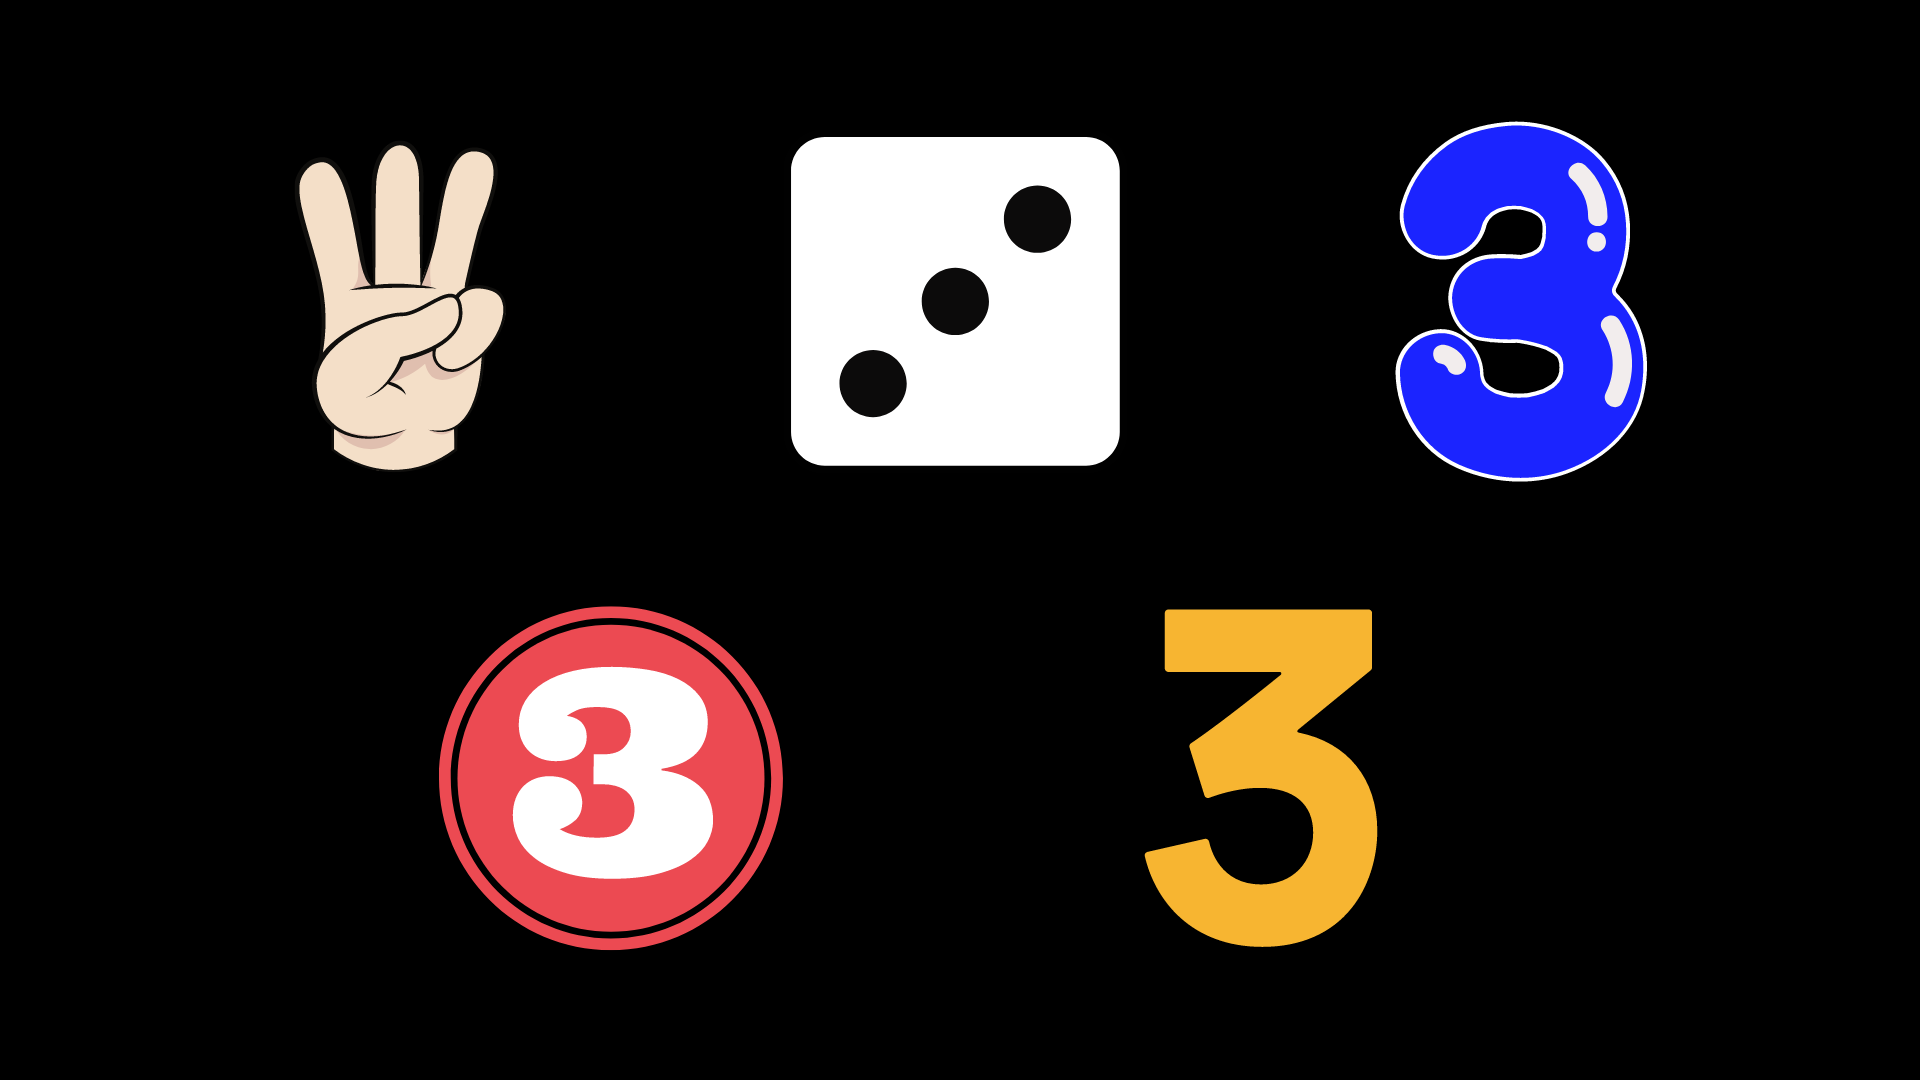 Symbols for 3